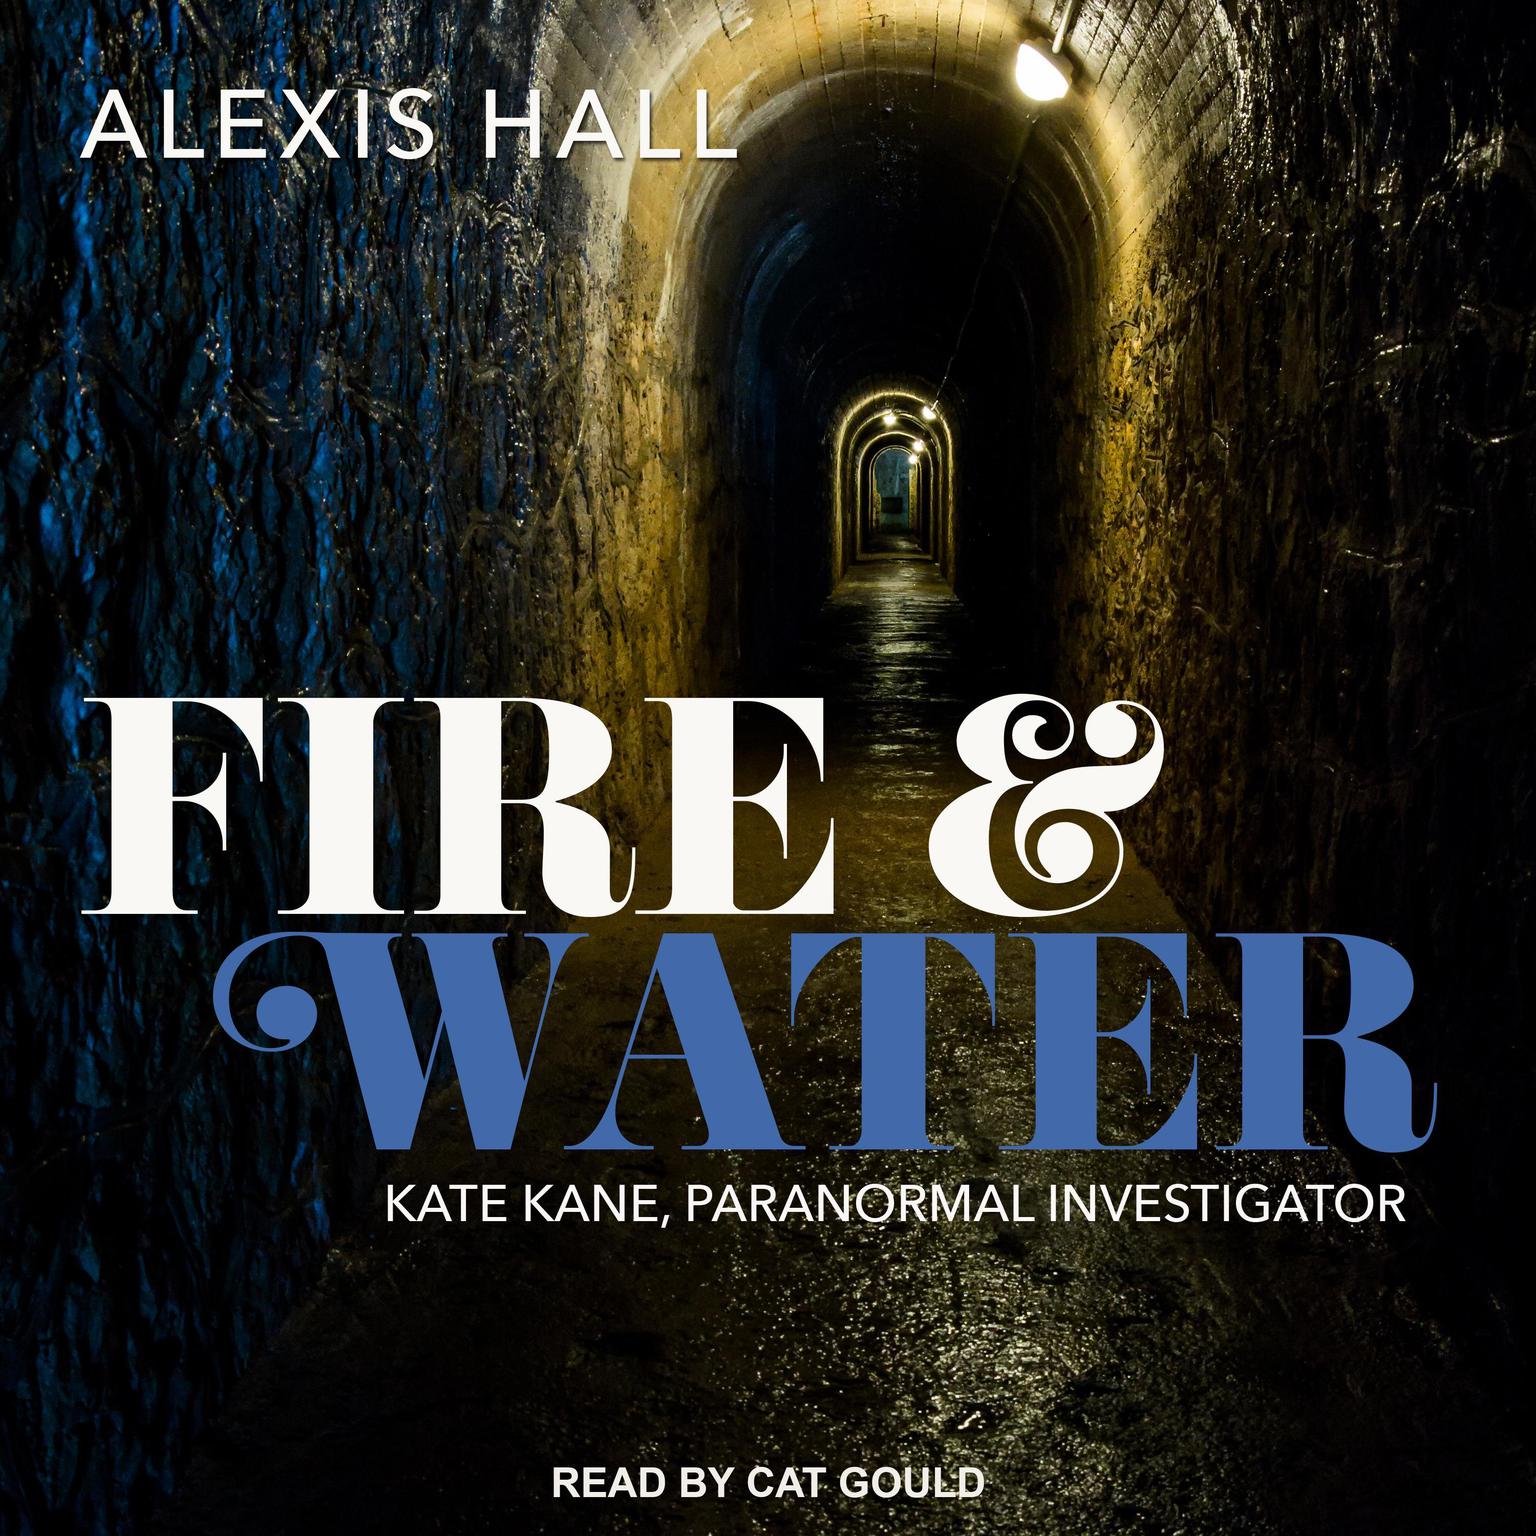 Alexis Hall, Cat Gould: Fire & Water (AudiobookFormat, 2020, Tantor Audio)